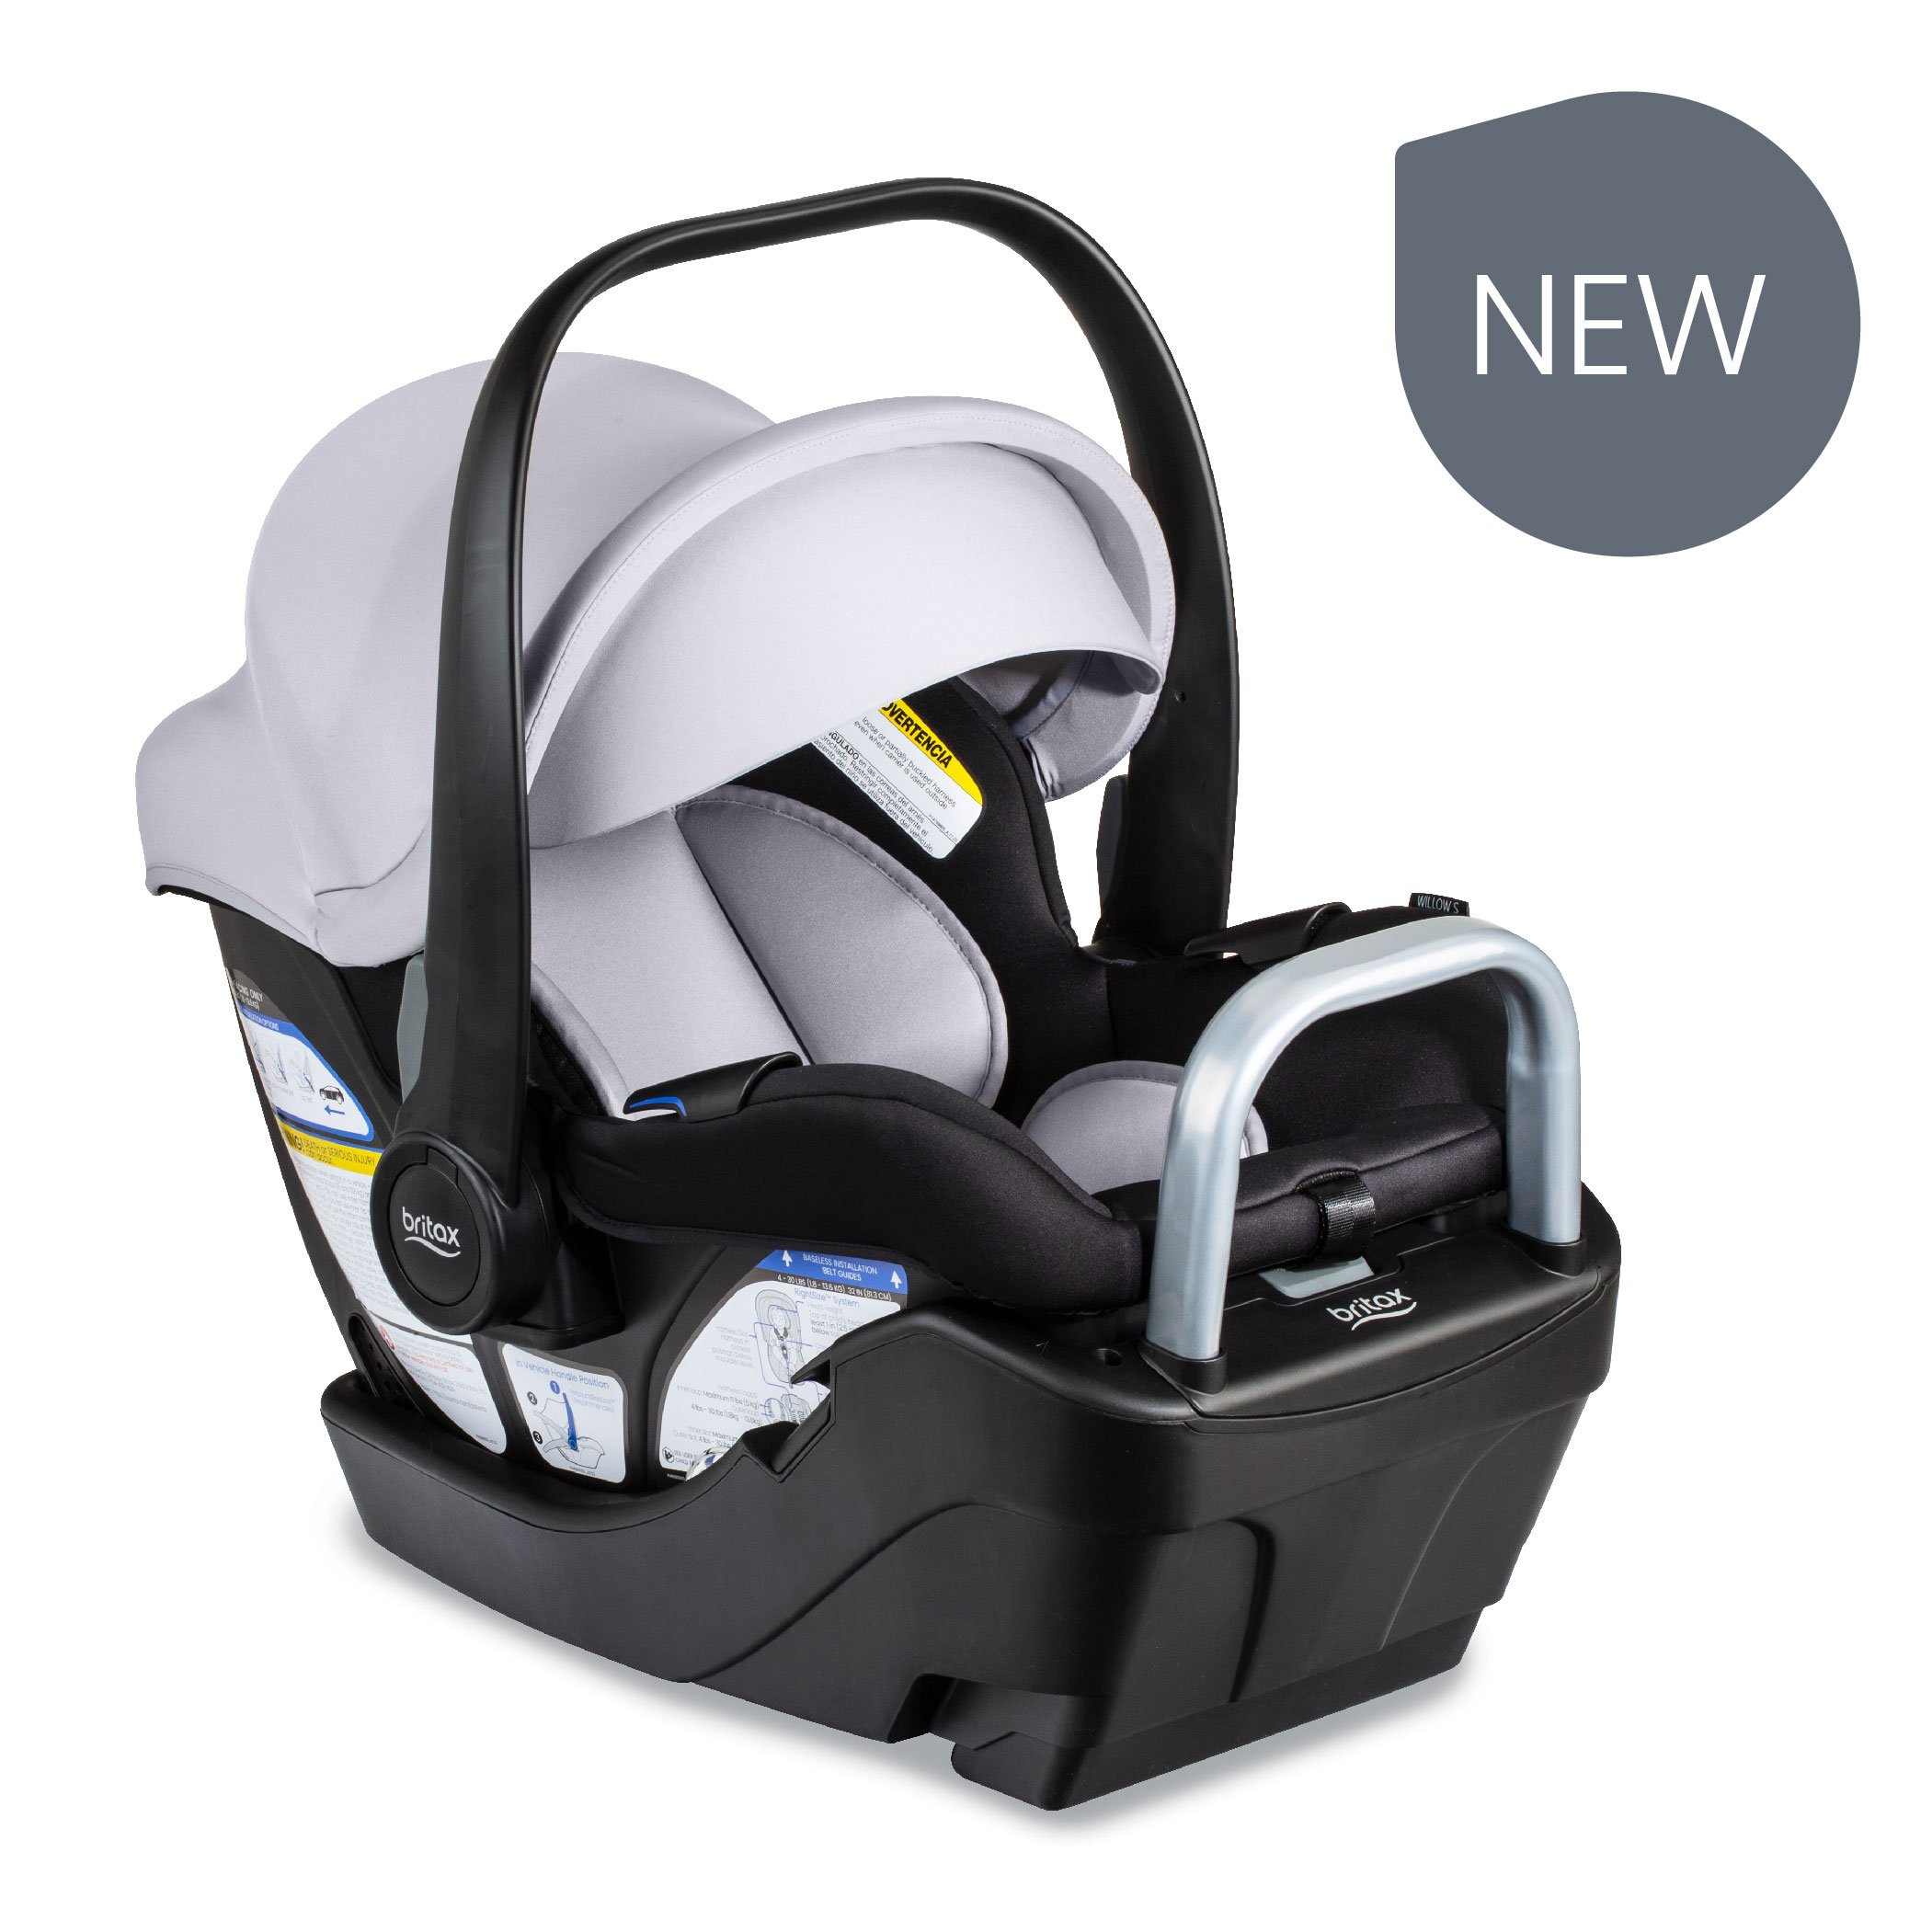 NEW Glacier Onyx Willow S Infant Car Seat  